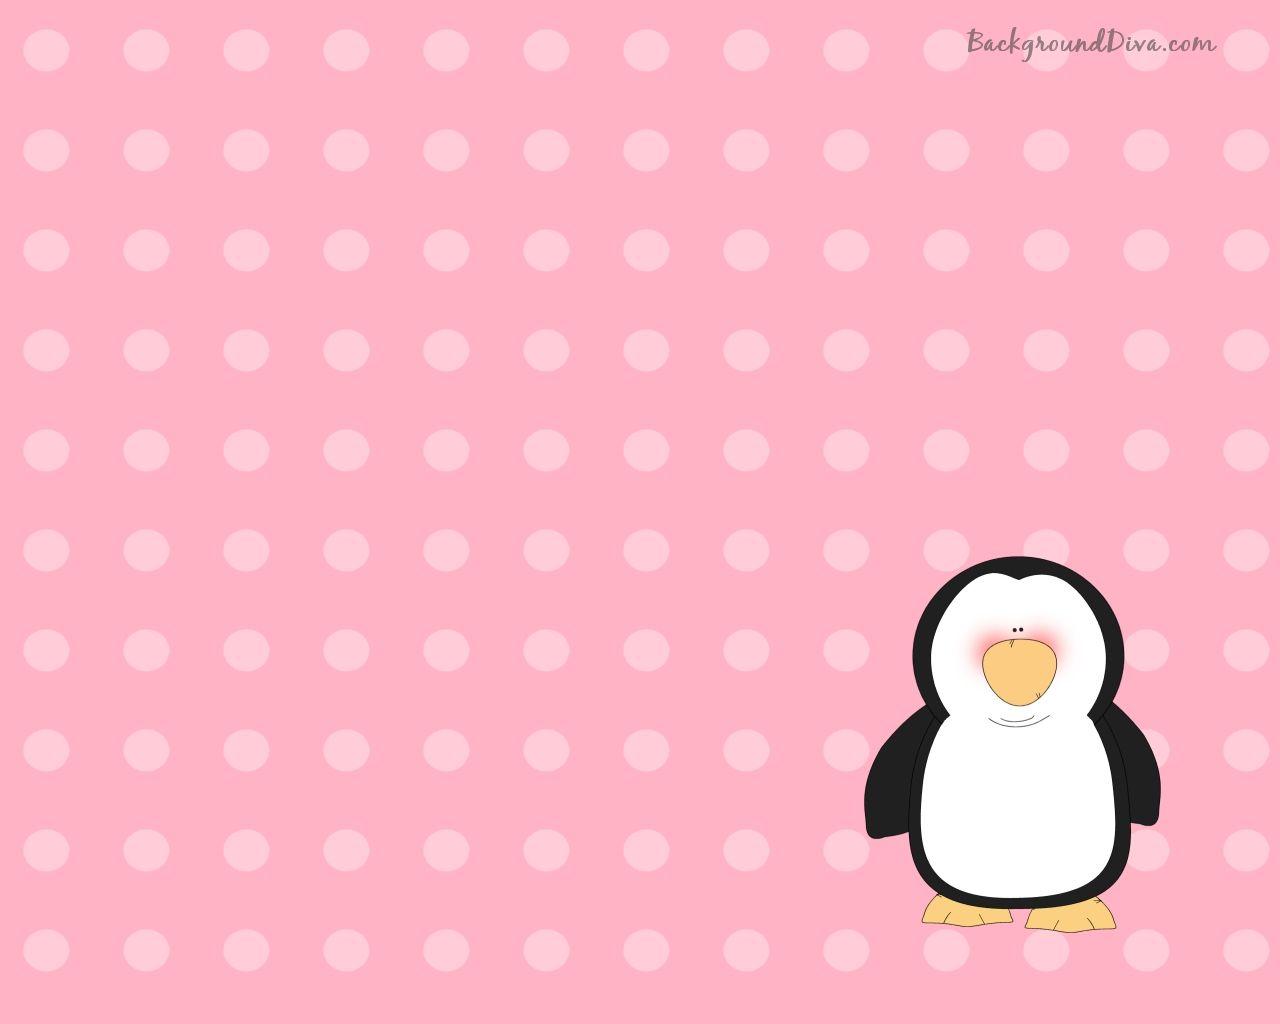 Wallpaper For > Cute Penguin Desktop Wallpaper